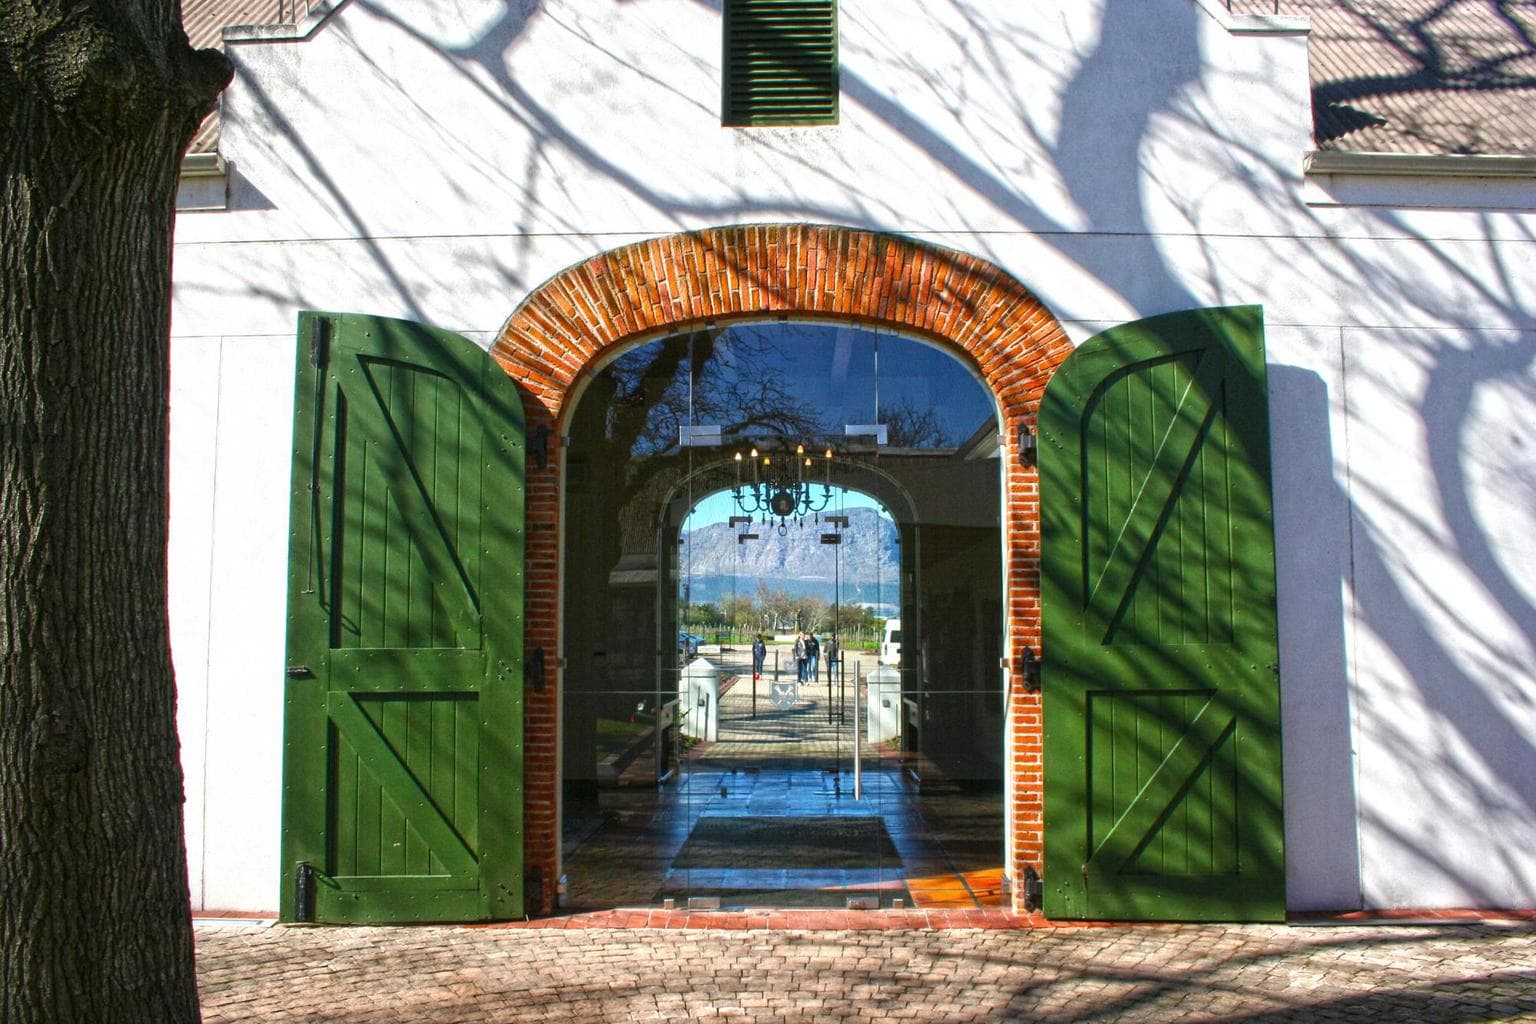 Entrance to La Motte